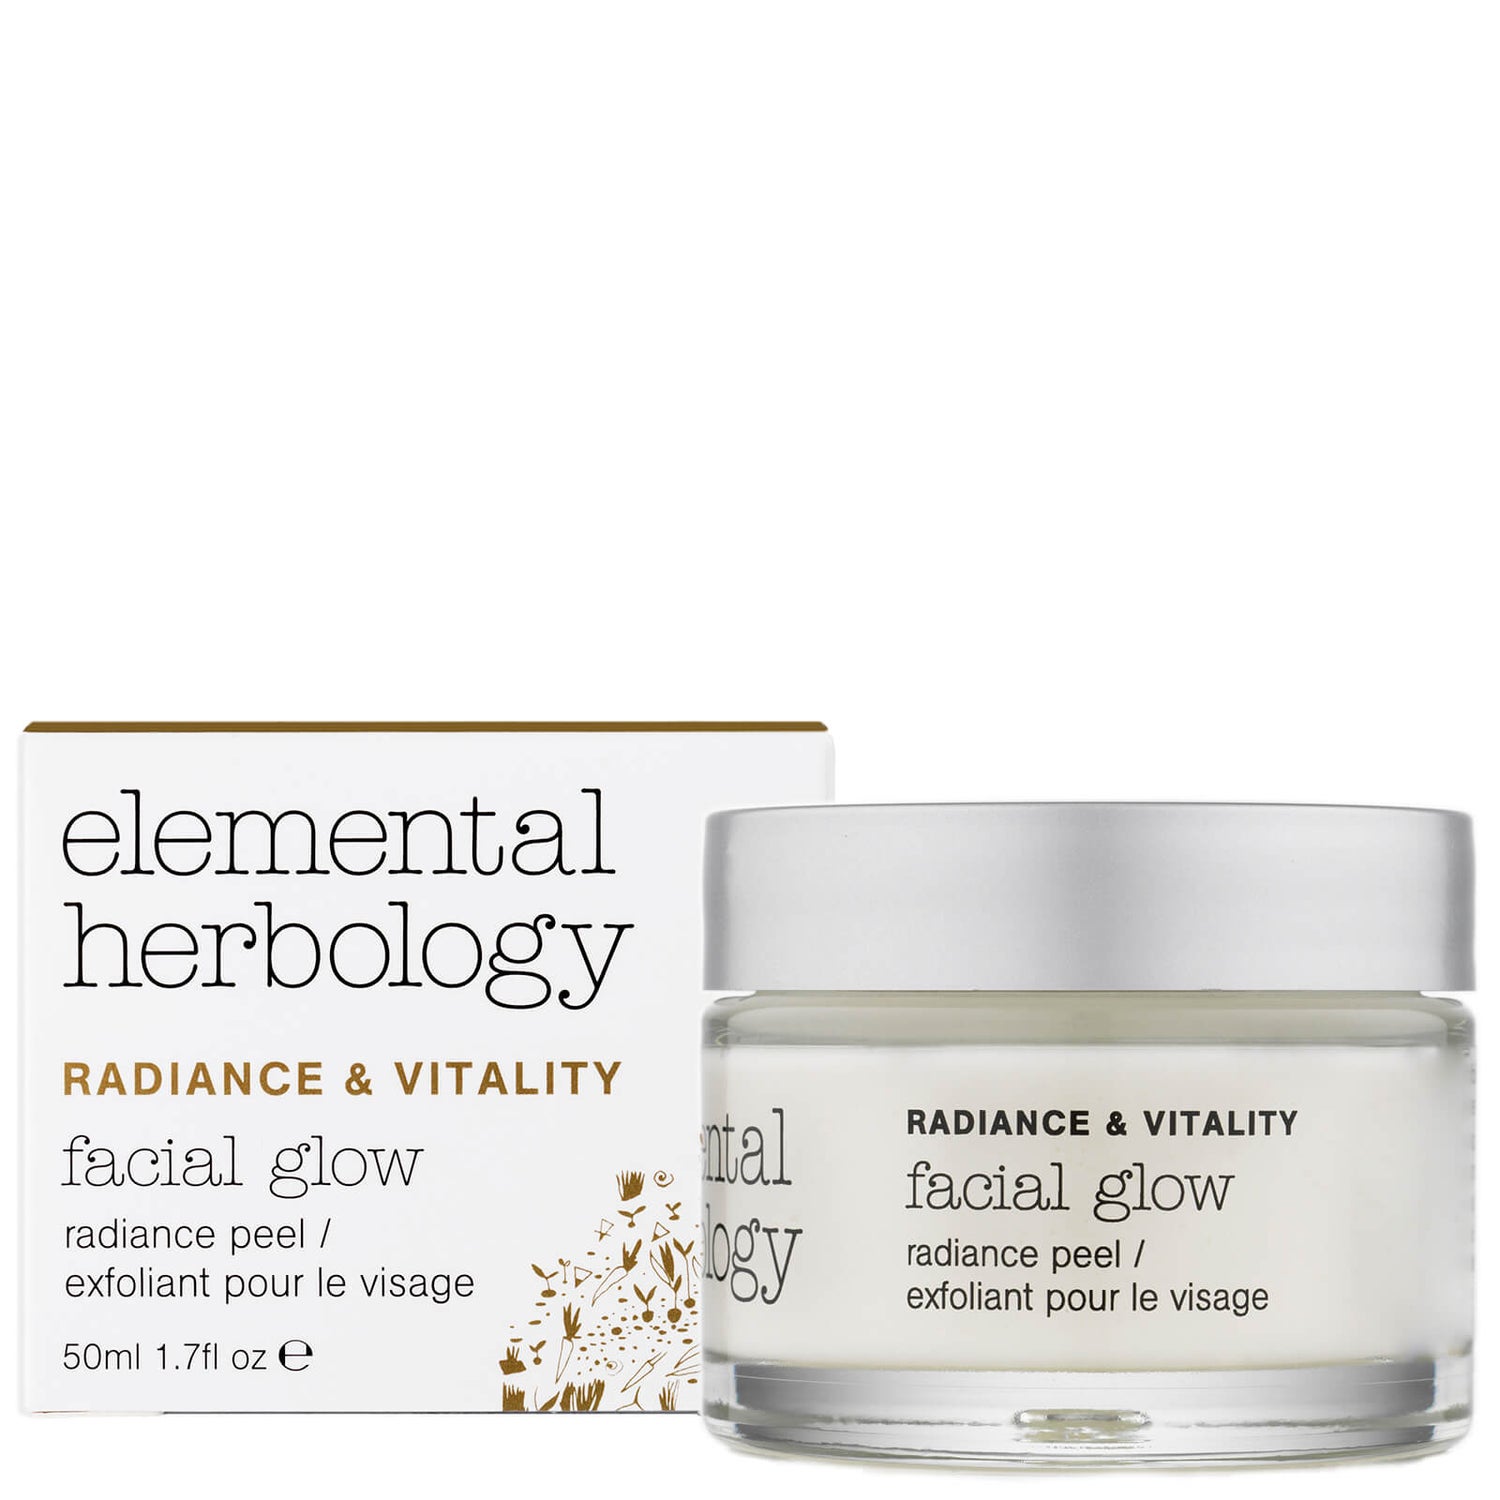 Exfoliante facial Facial Glow Radiance Peel de Elemental Herbology 50 ml